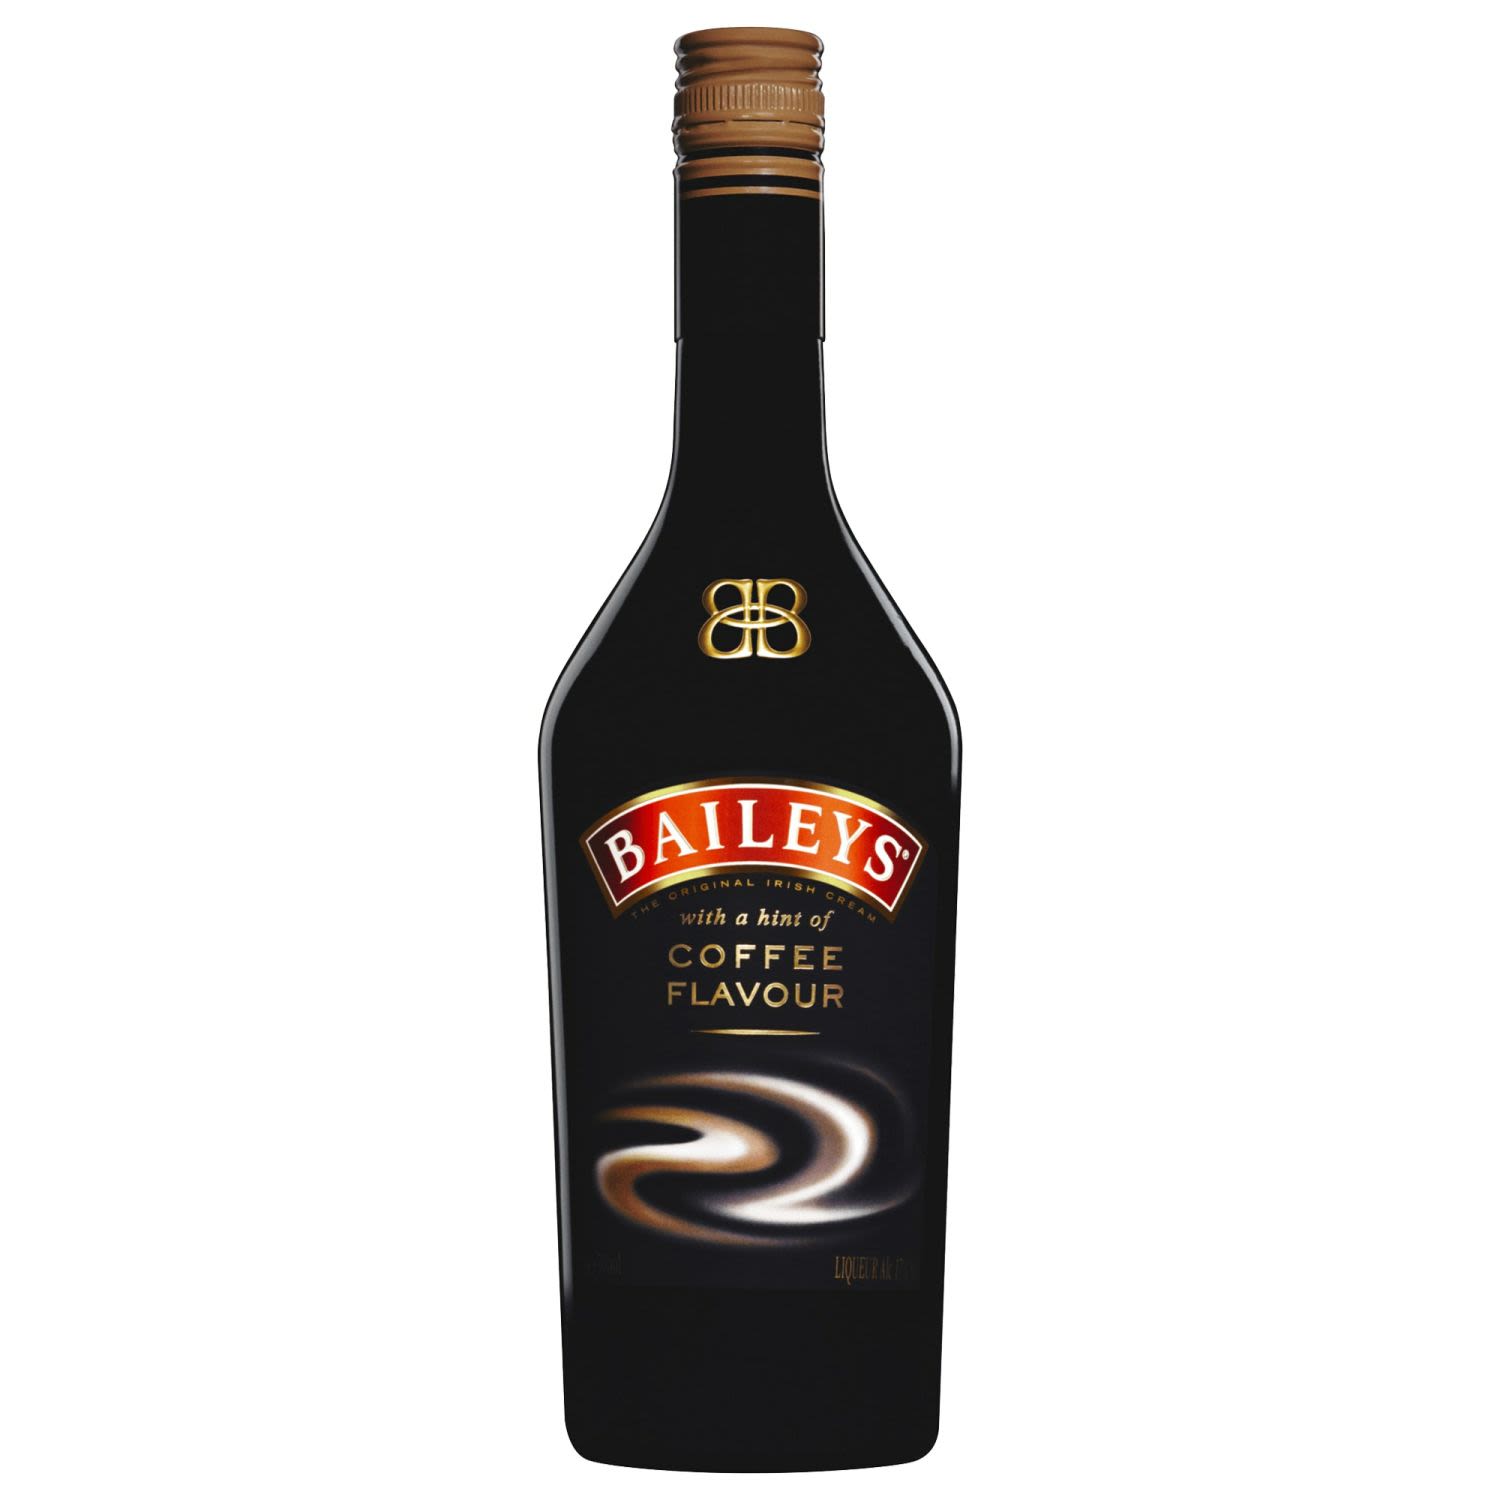 Baileys Original Irish Creme With a Hint of Coffee Liqueur 700mL Bottle